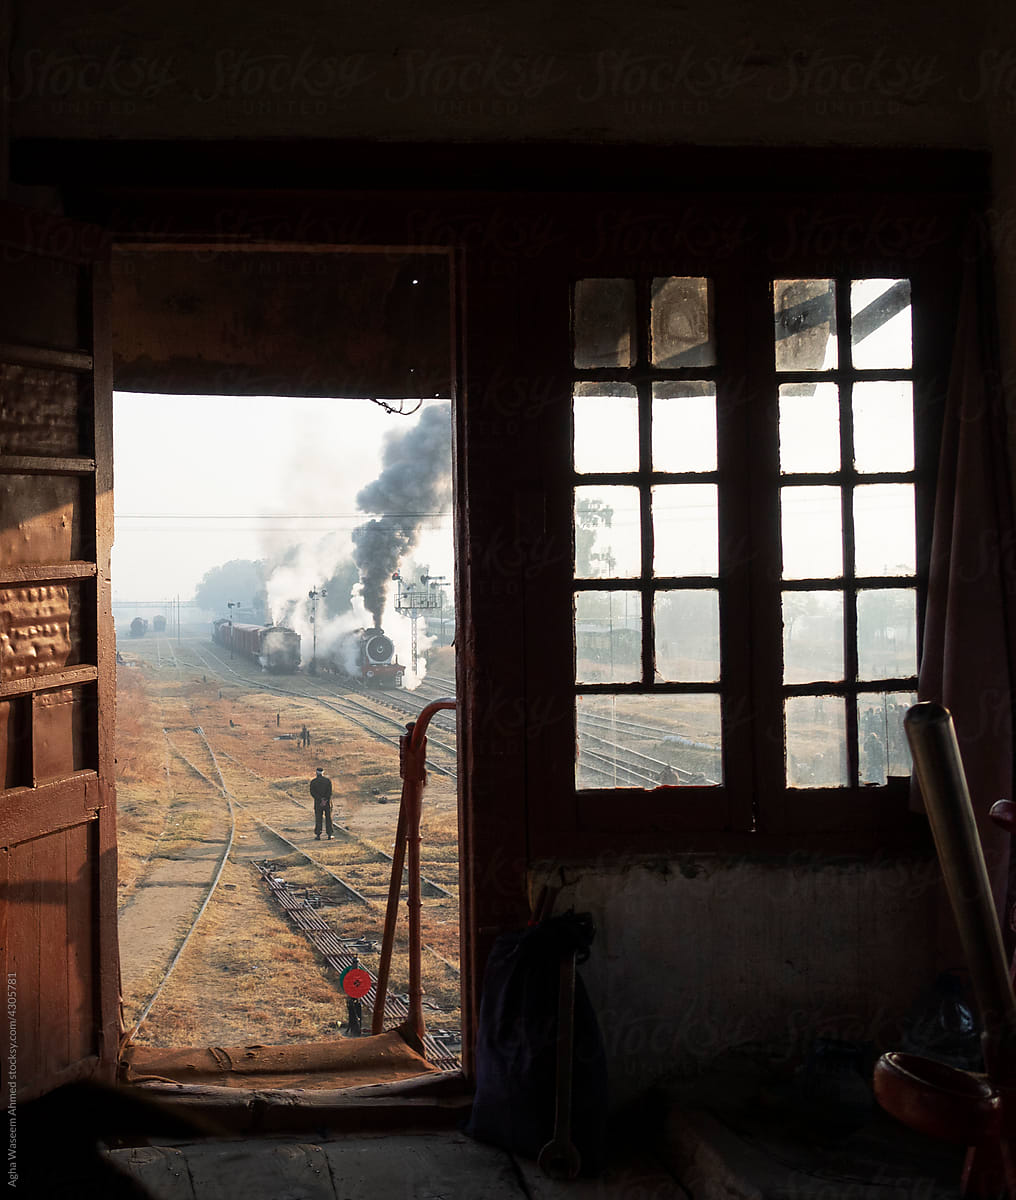 A Steam Train framed through the window of a signal cabin